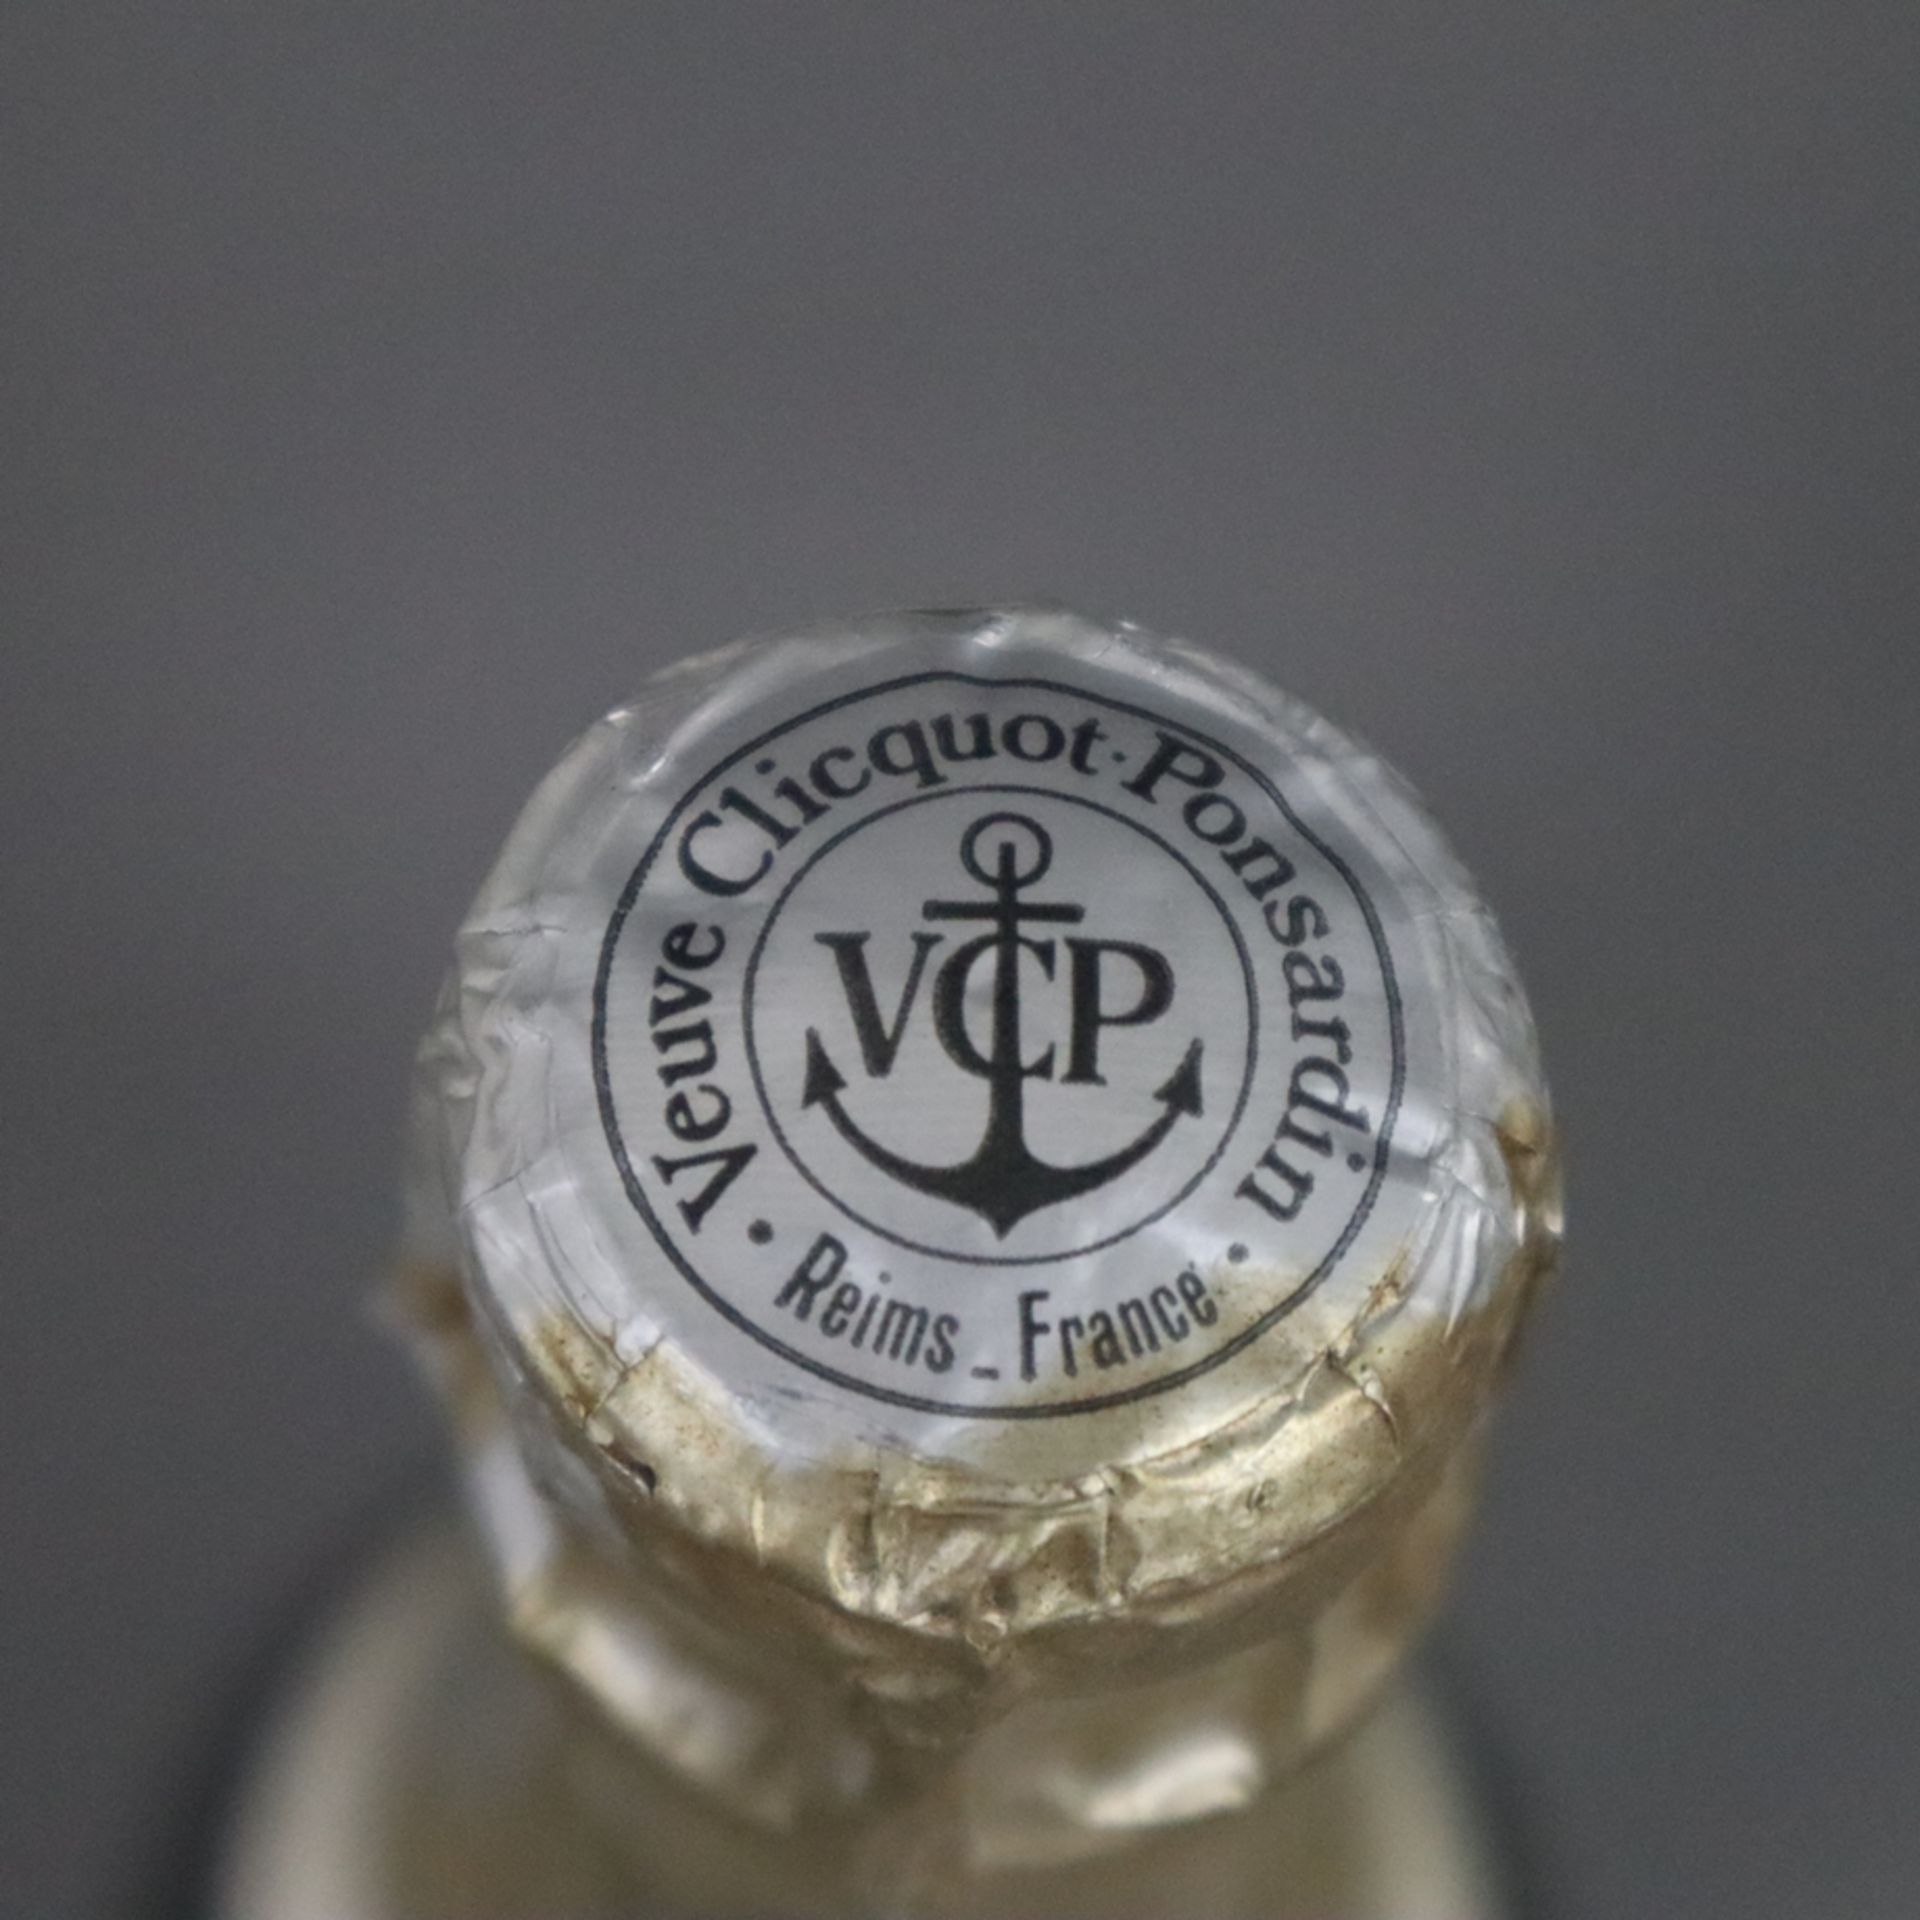 Champagner - Veuve Clicquot Ponsardin Bicentenaire 1772-1972 Brut, Reims, France, 750ml, Flasche ve - Image 4 of 5